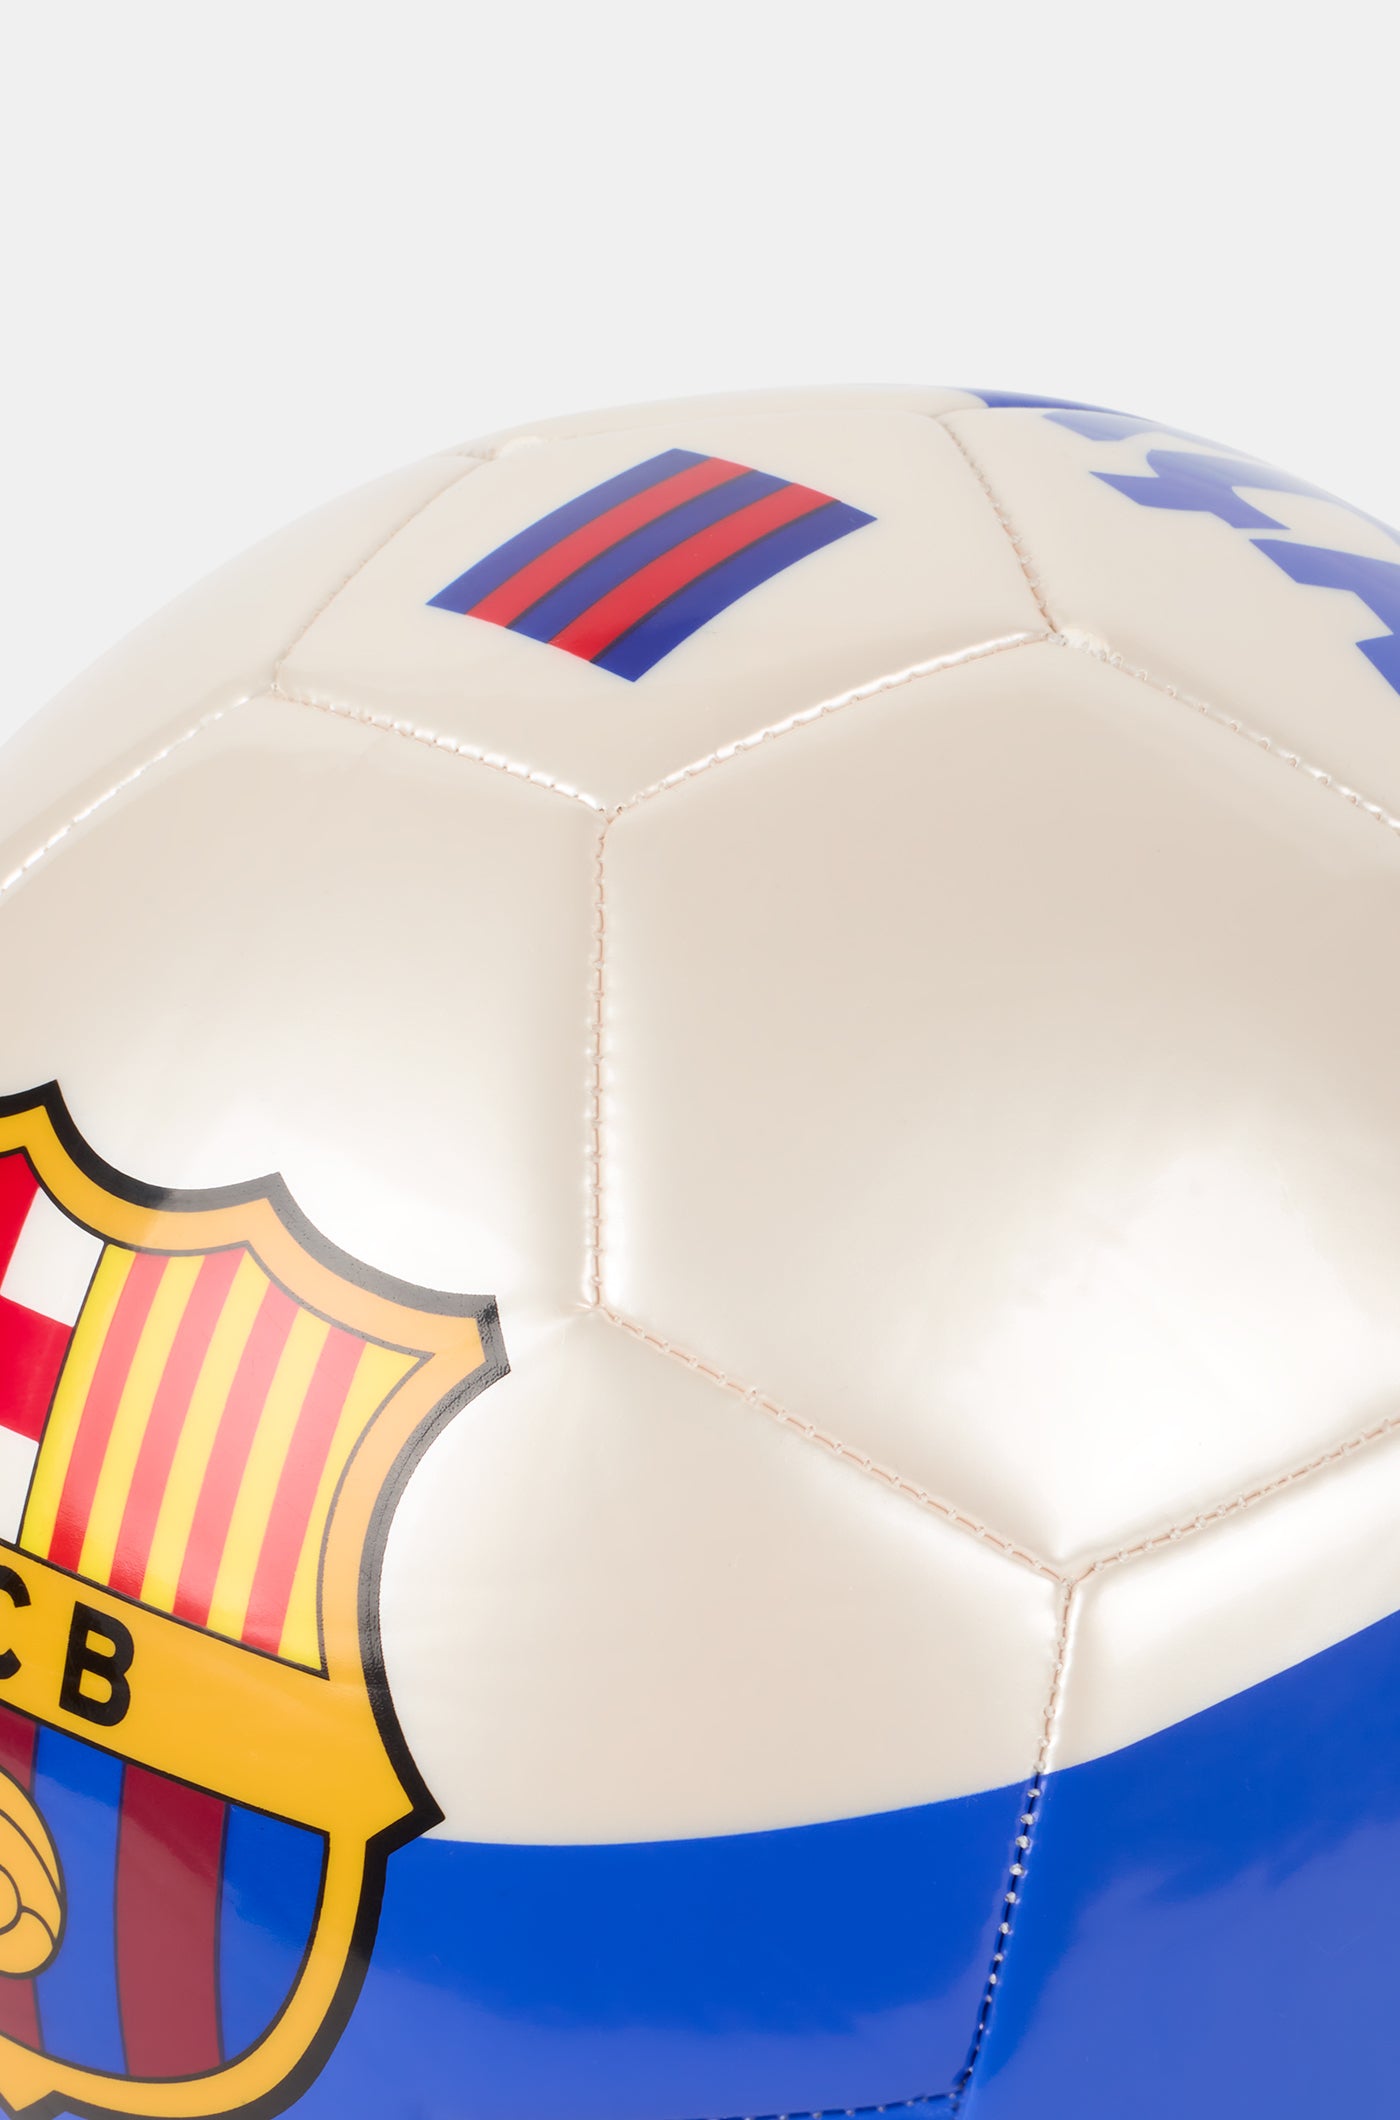 Away Kit Ball 23/24 FC Barcelona